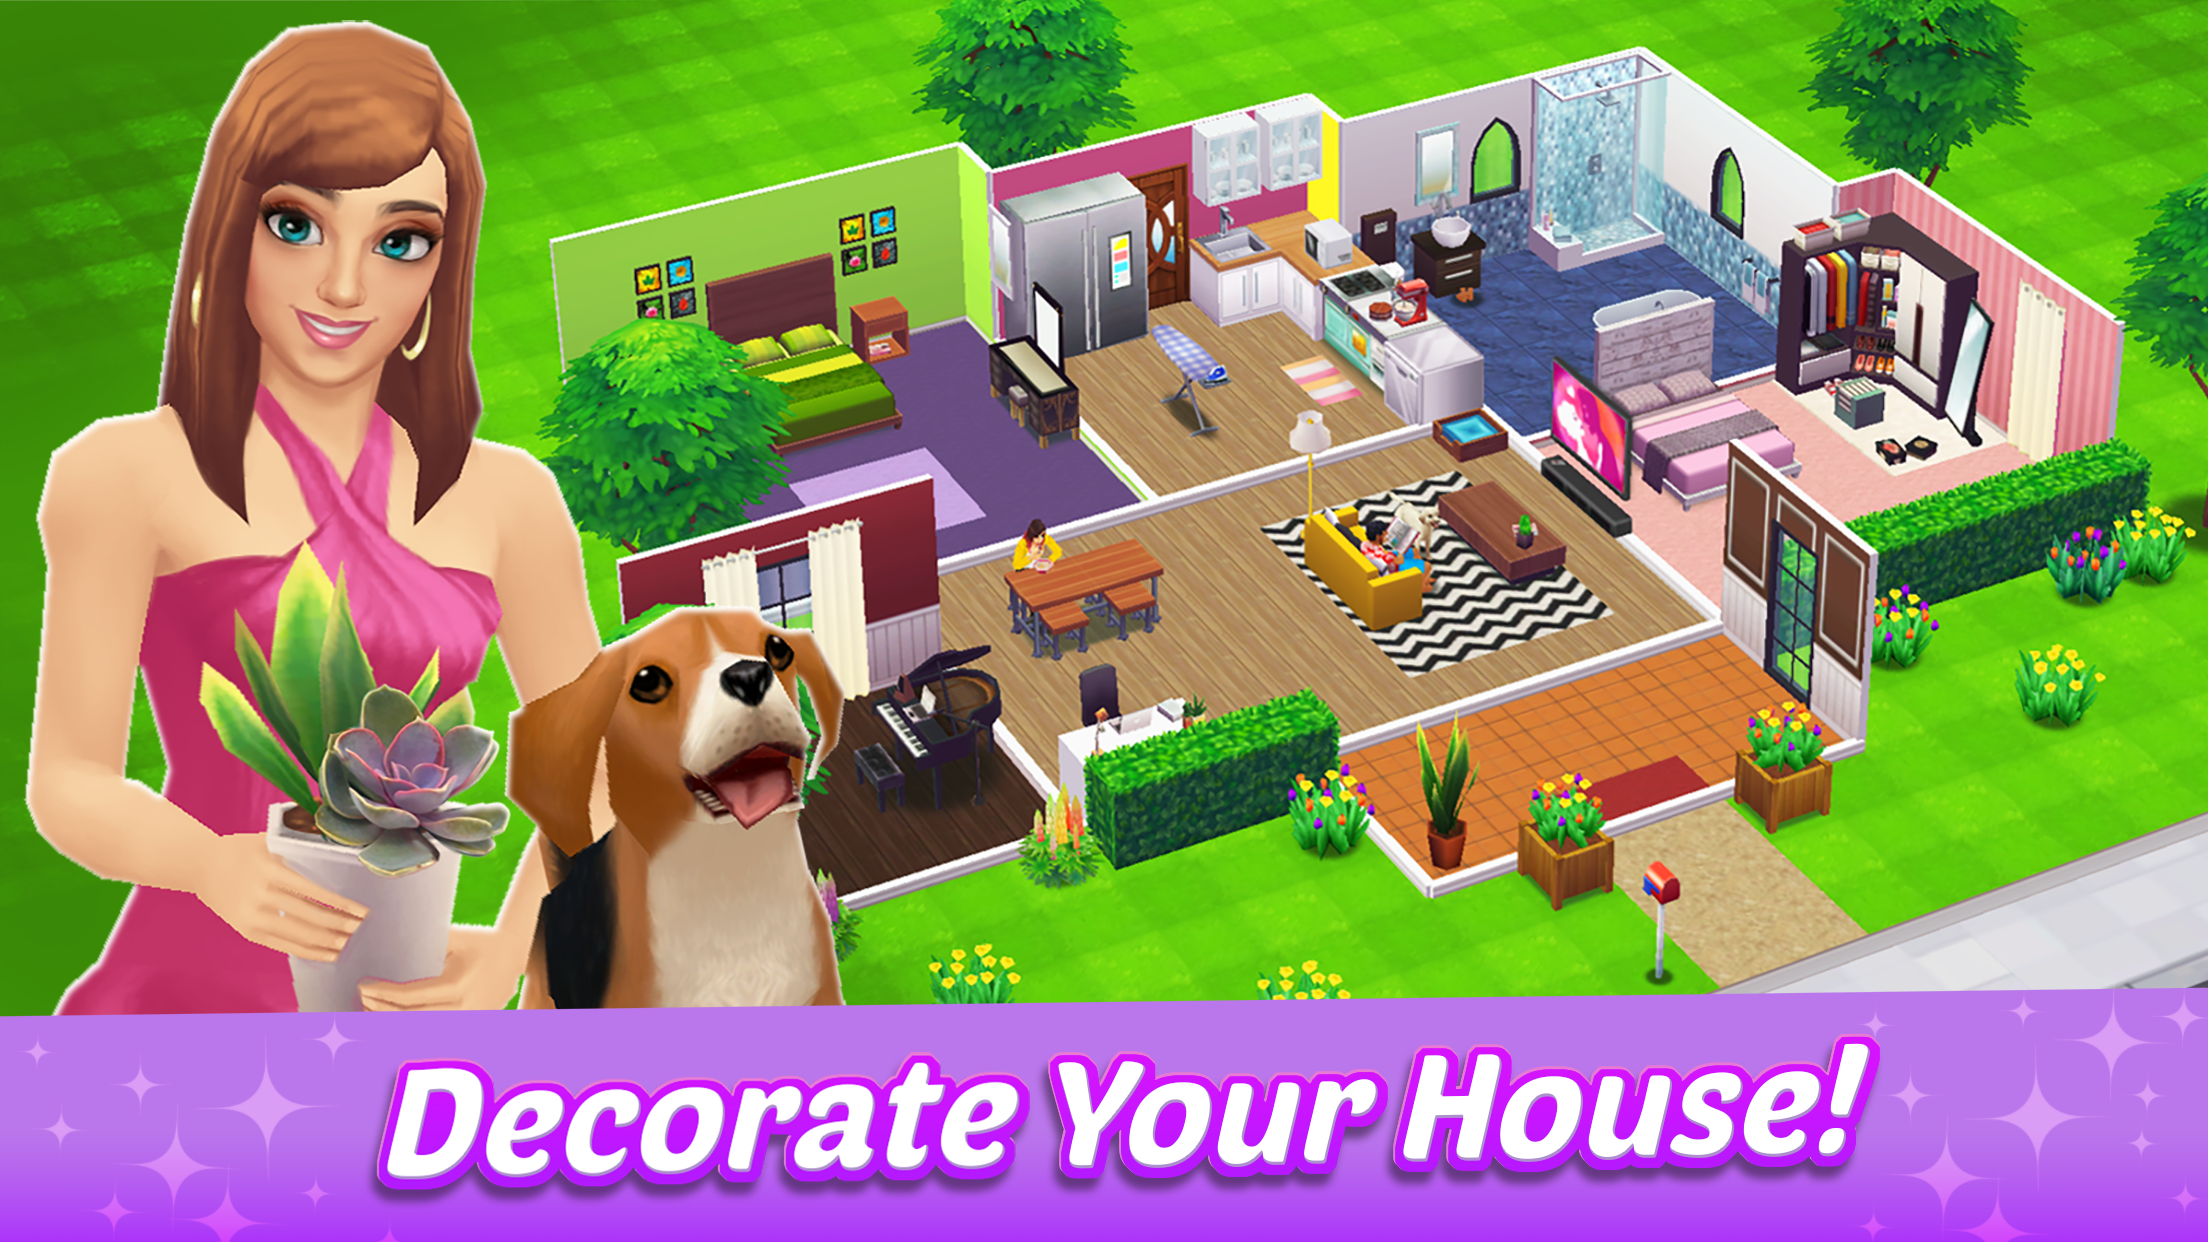 Phố Nhà Dream House Sim phiên bản điện thoại Android iOS apk tải ...